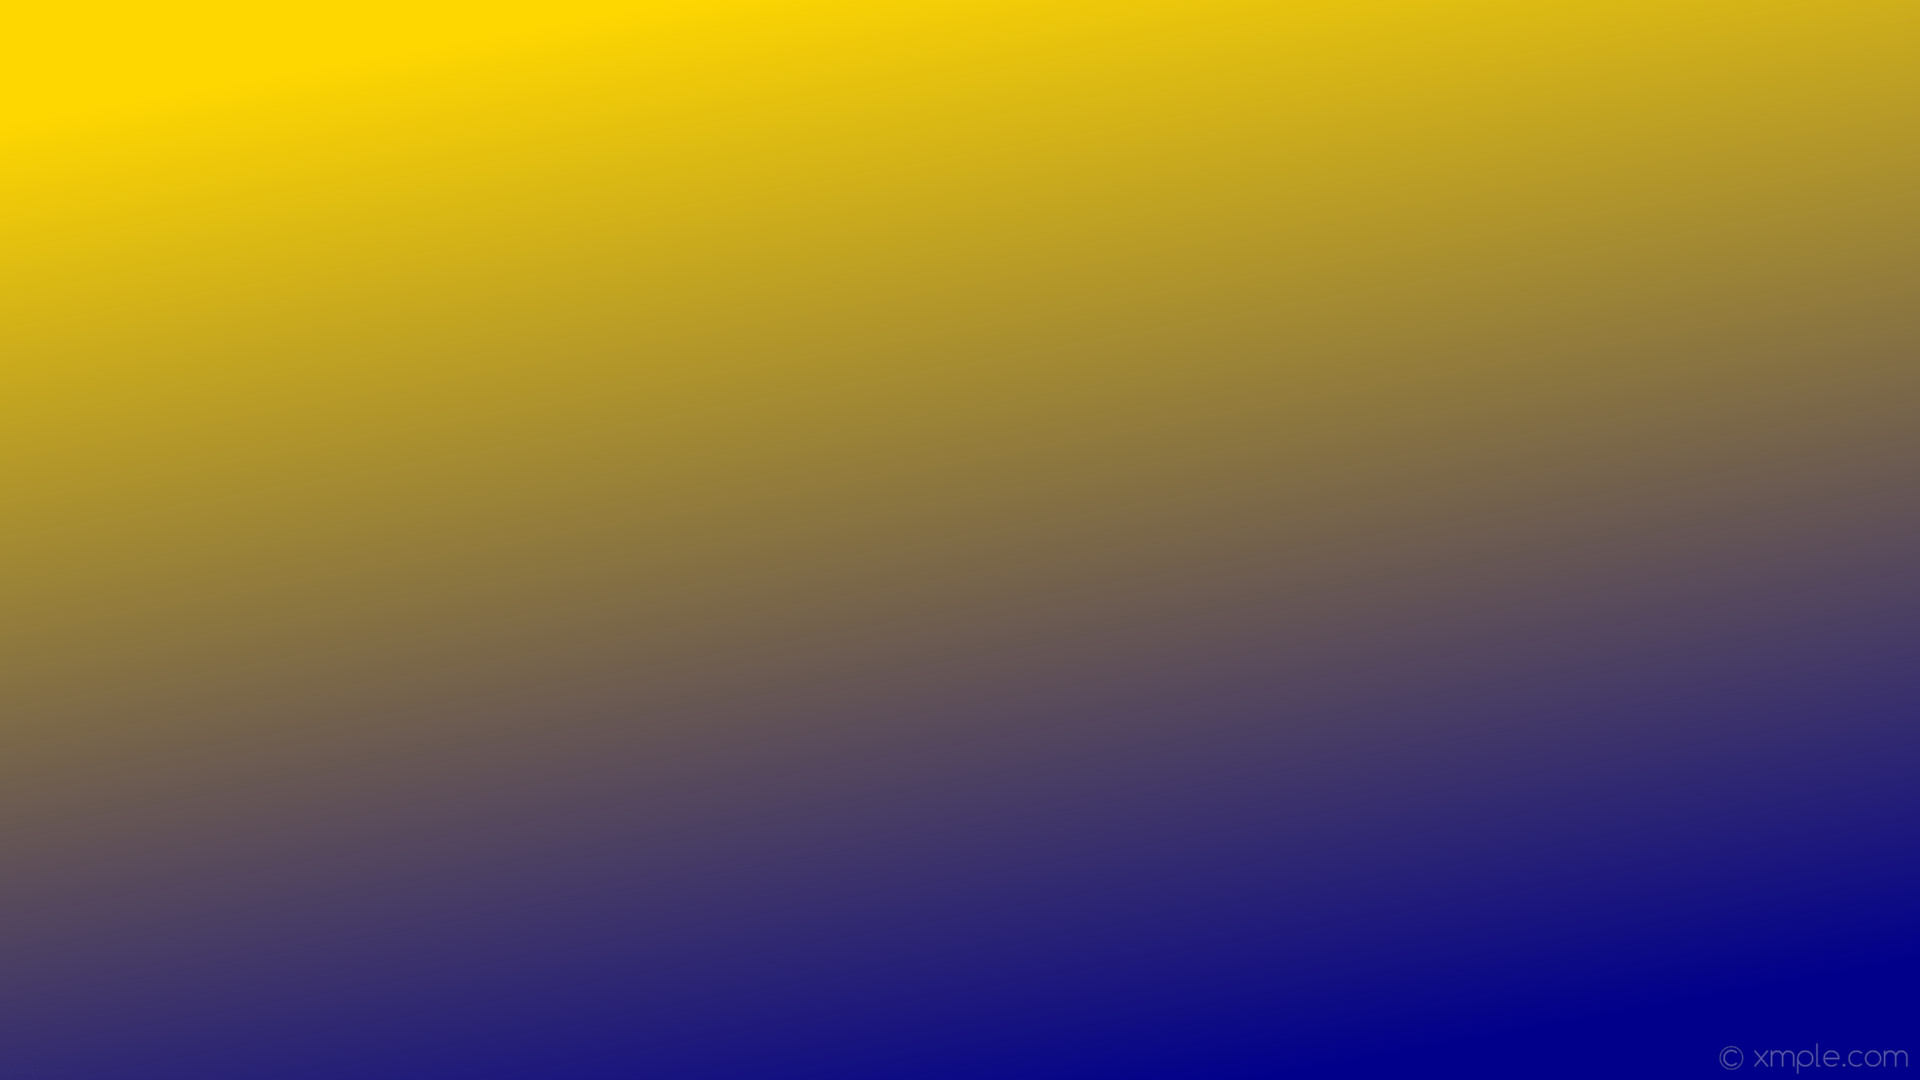 1920x1080 wallpaper blue yellow gradient linear dark blue gold #00008b #ffd700 300Â°